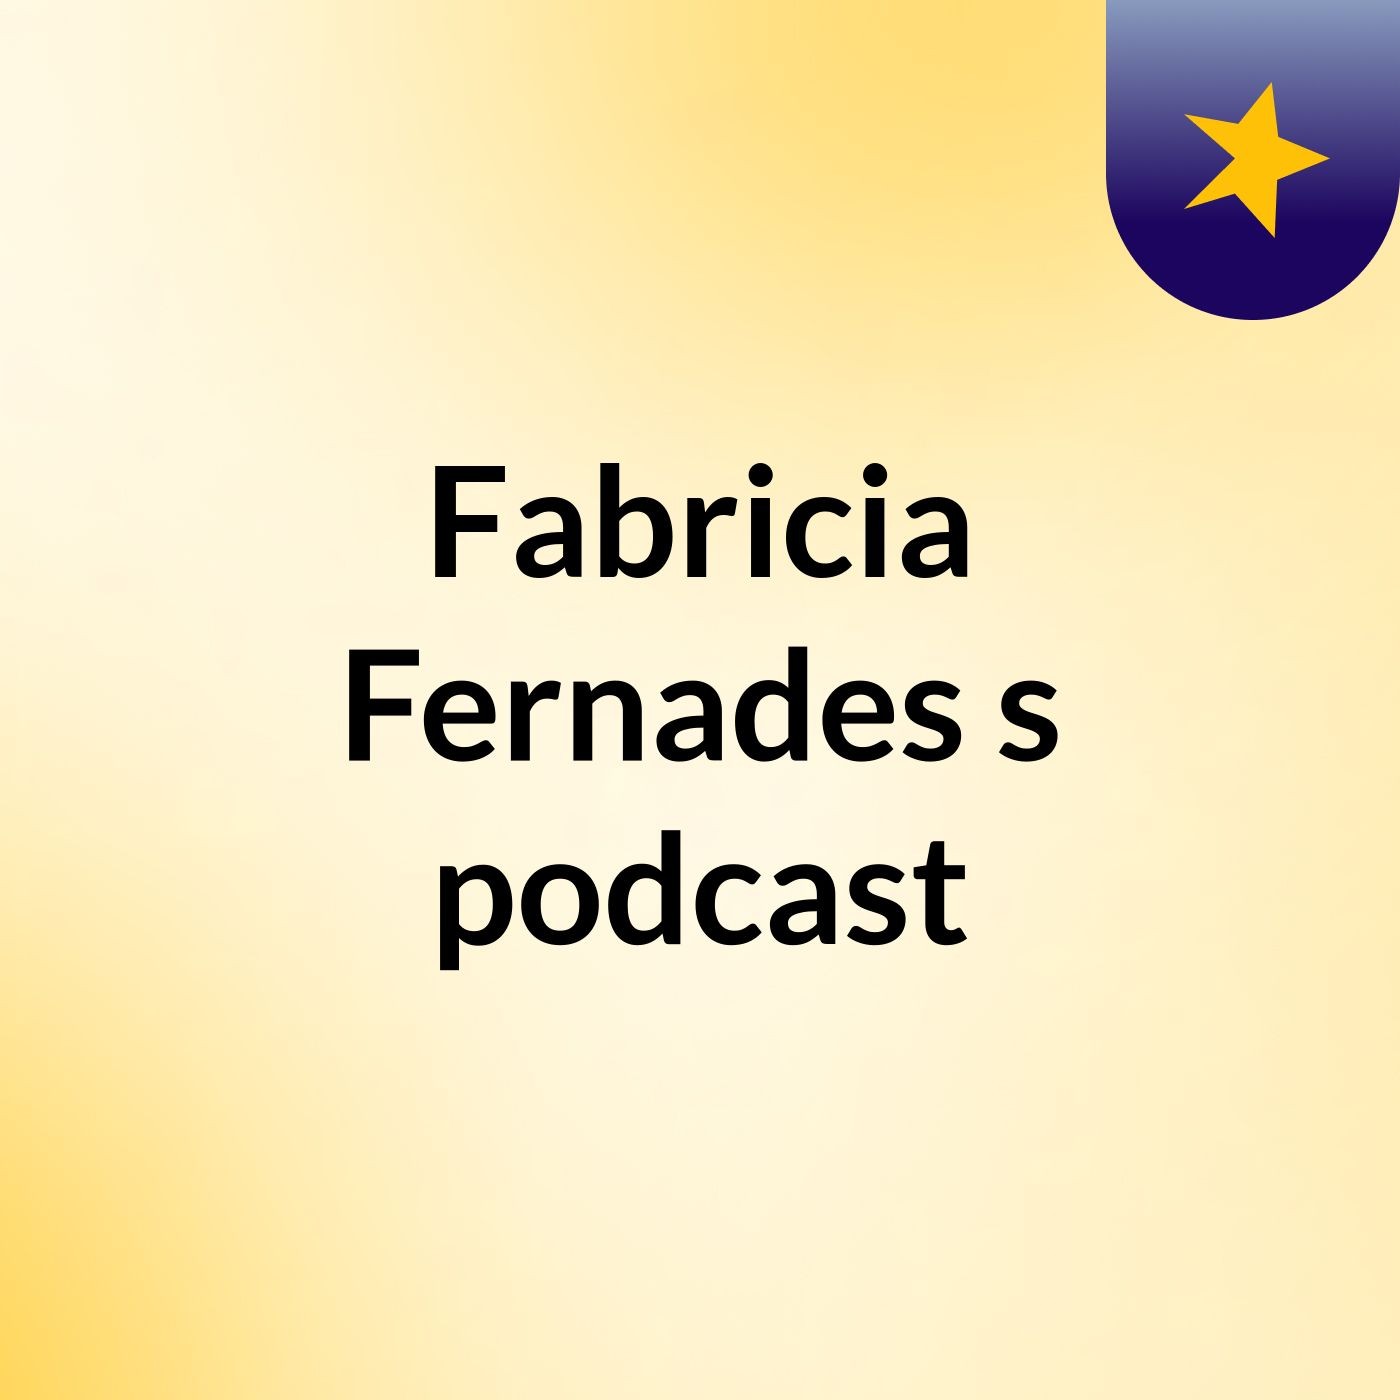 Fabricia Fernades's podcast